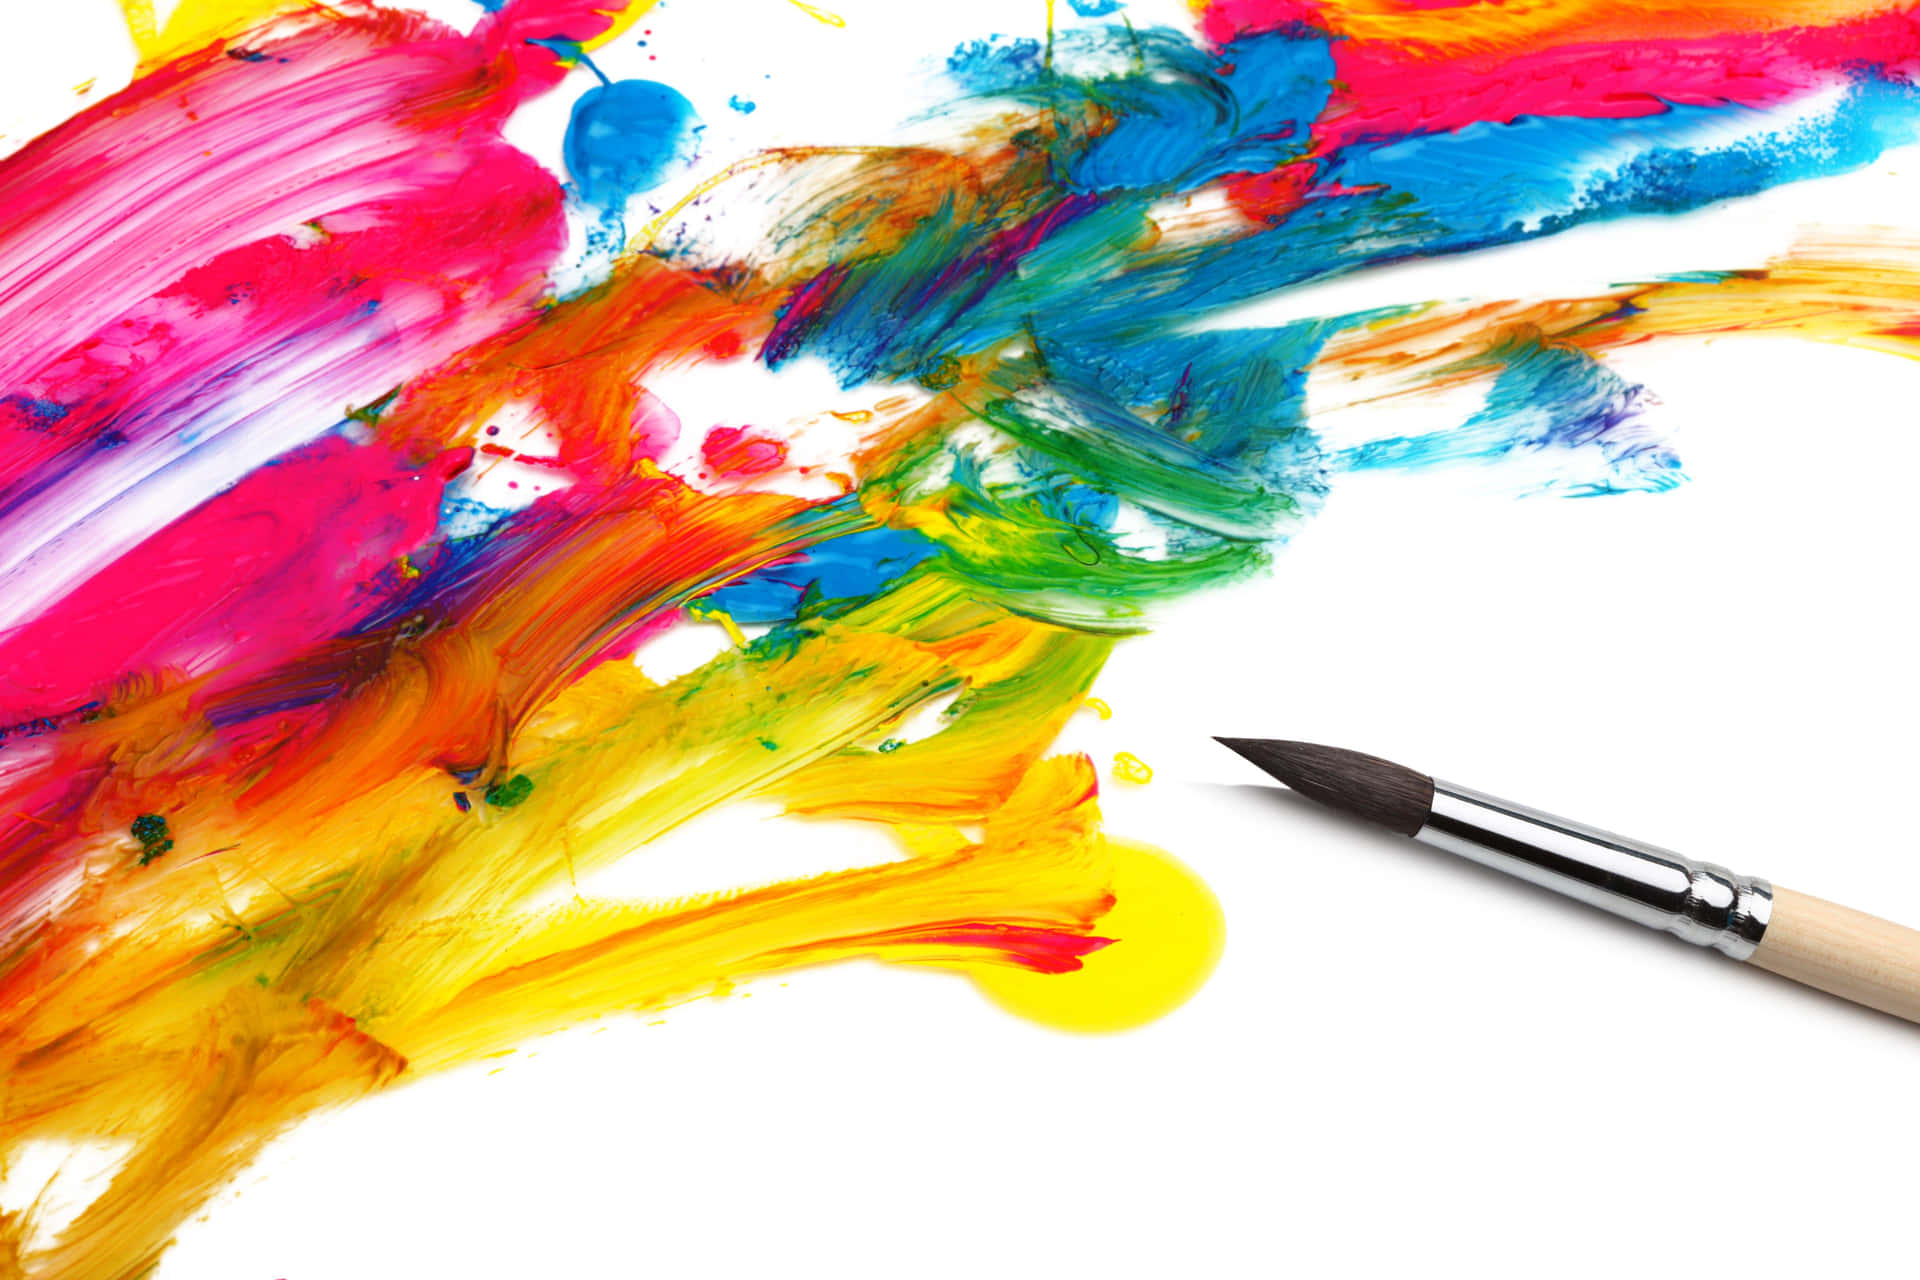 Vibrant Spill of Creativity